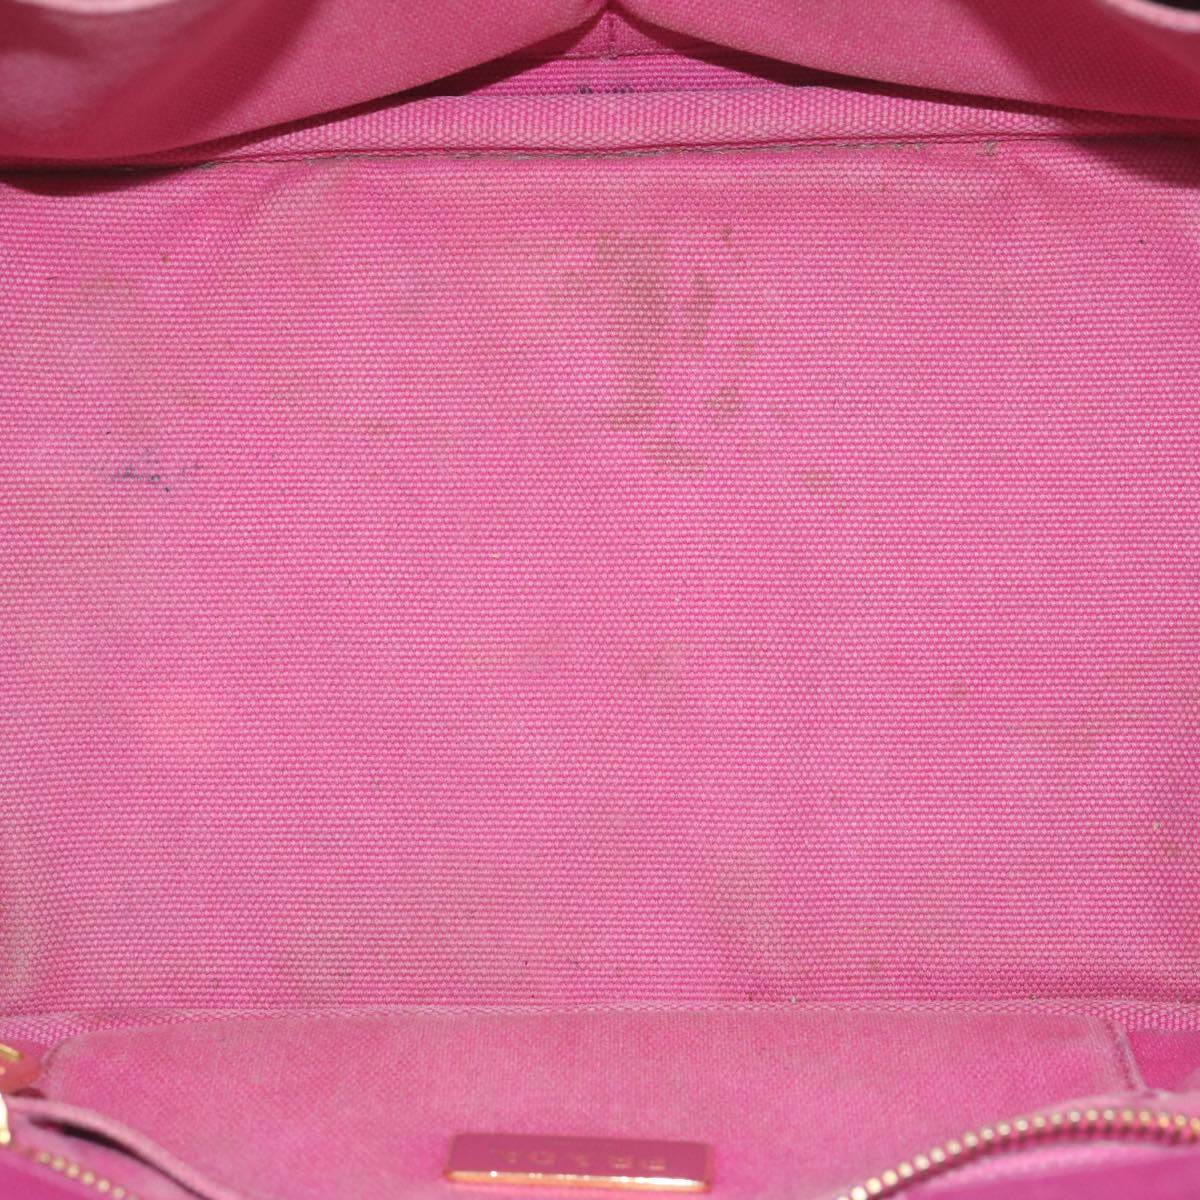 PRADA Canapa PM Hand Bag Canvas Pink Auth yb475